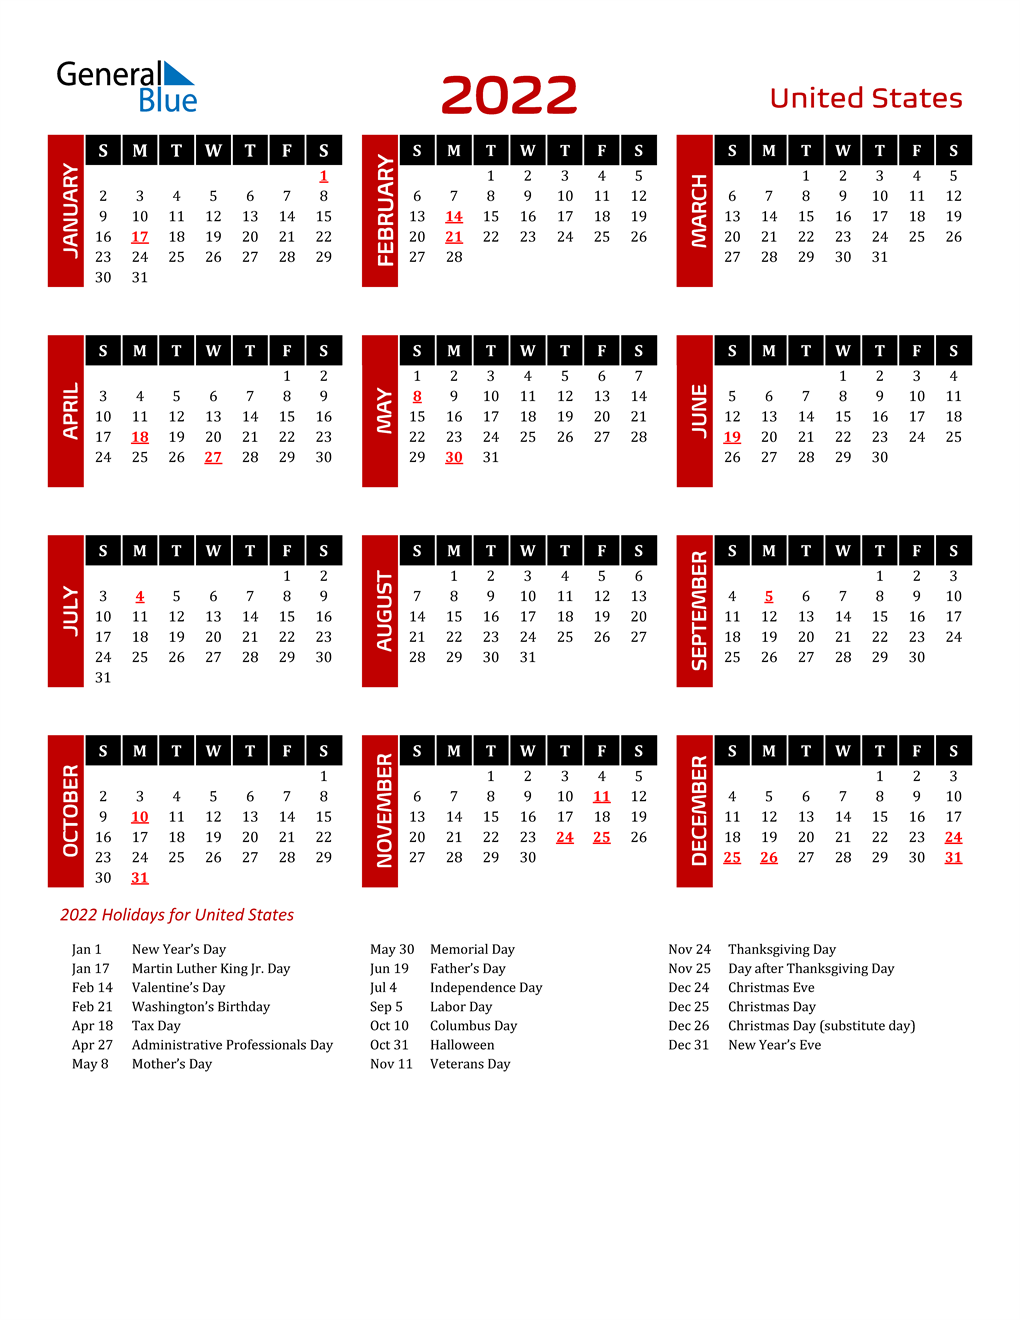 Nyse Holiday Calendar 2022 2022 United States Calendar With Holidays